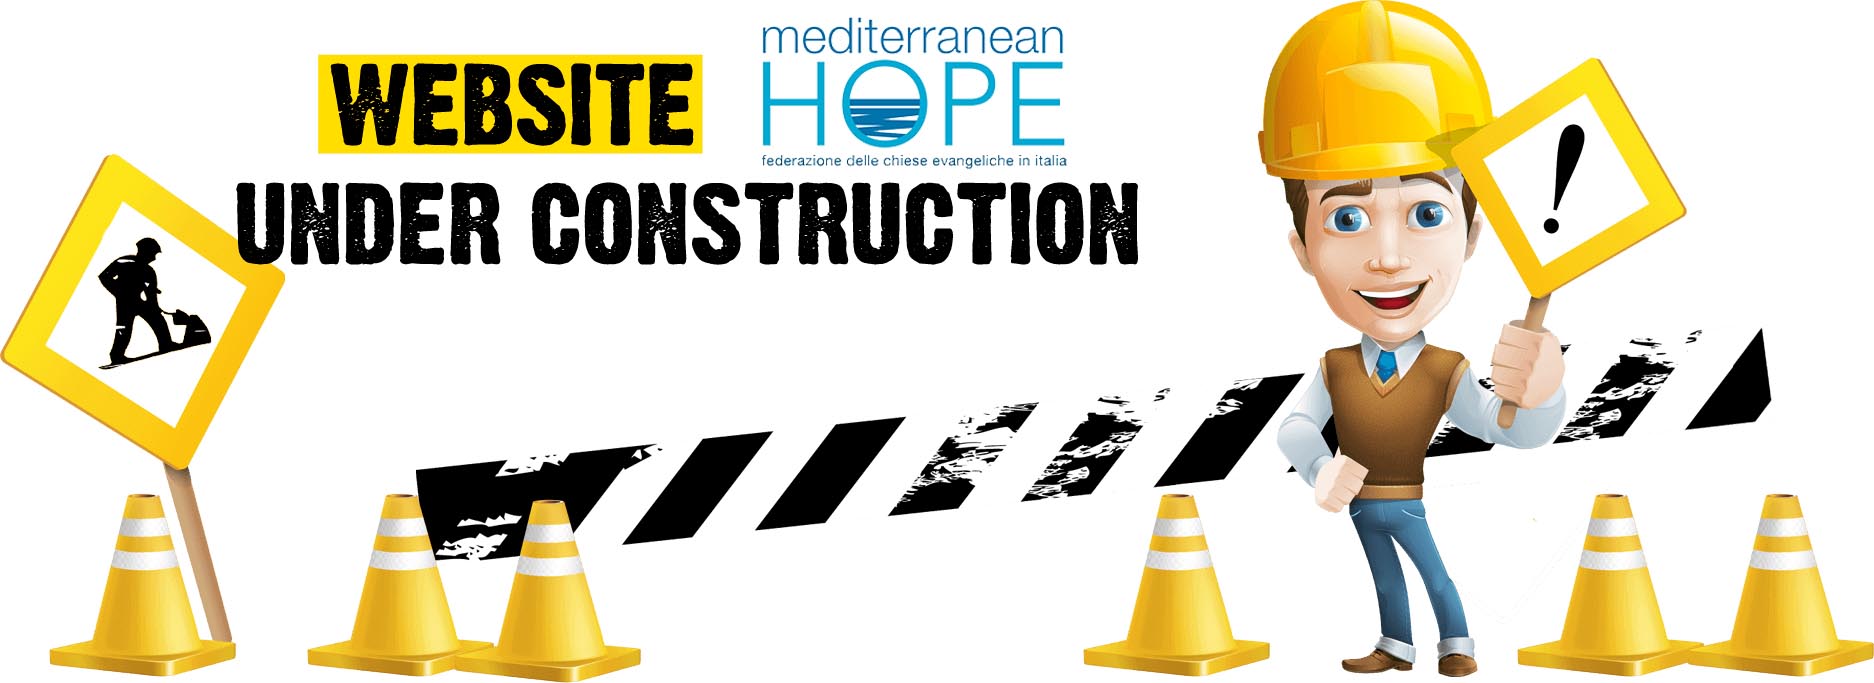 Mediterranean Hope - MH